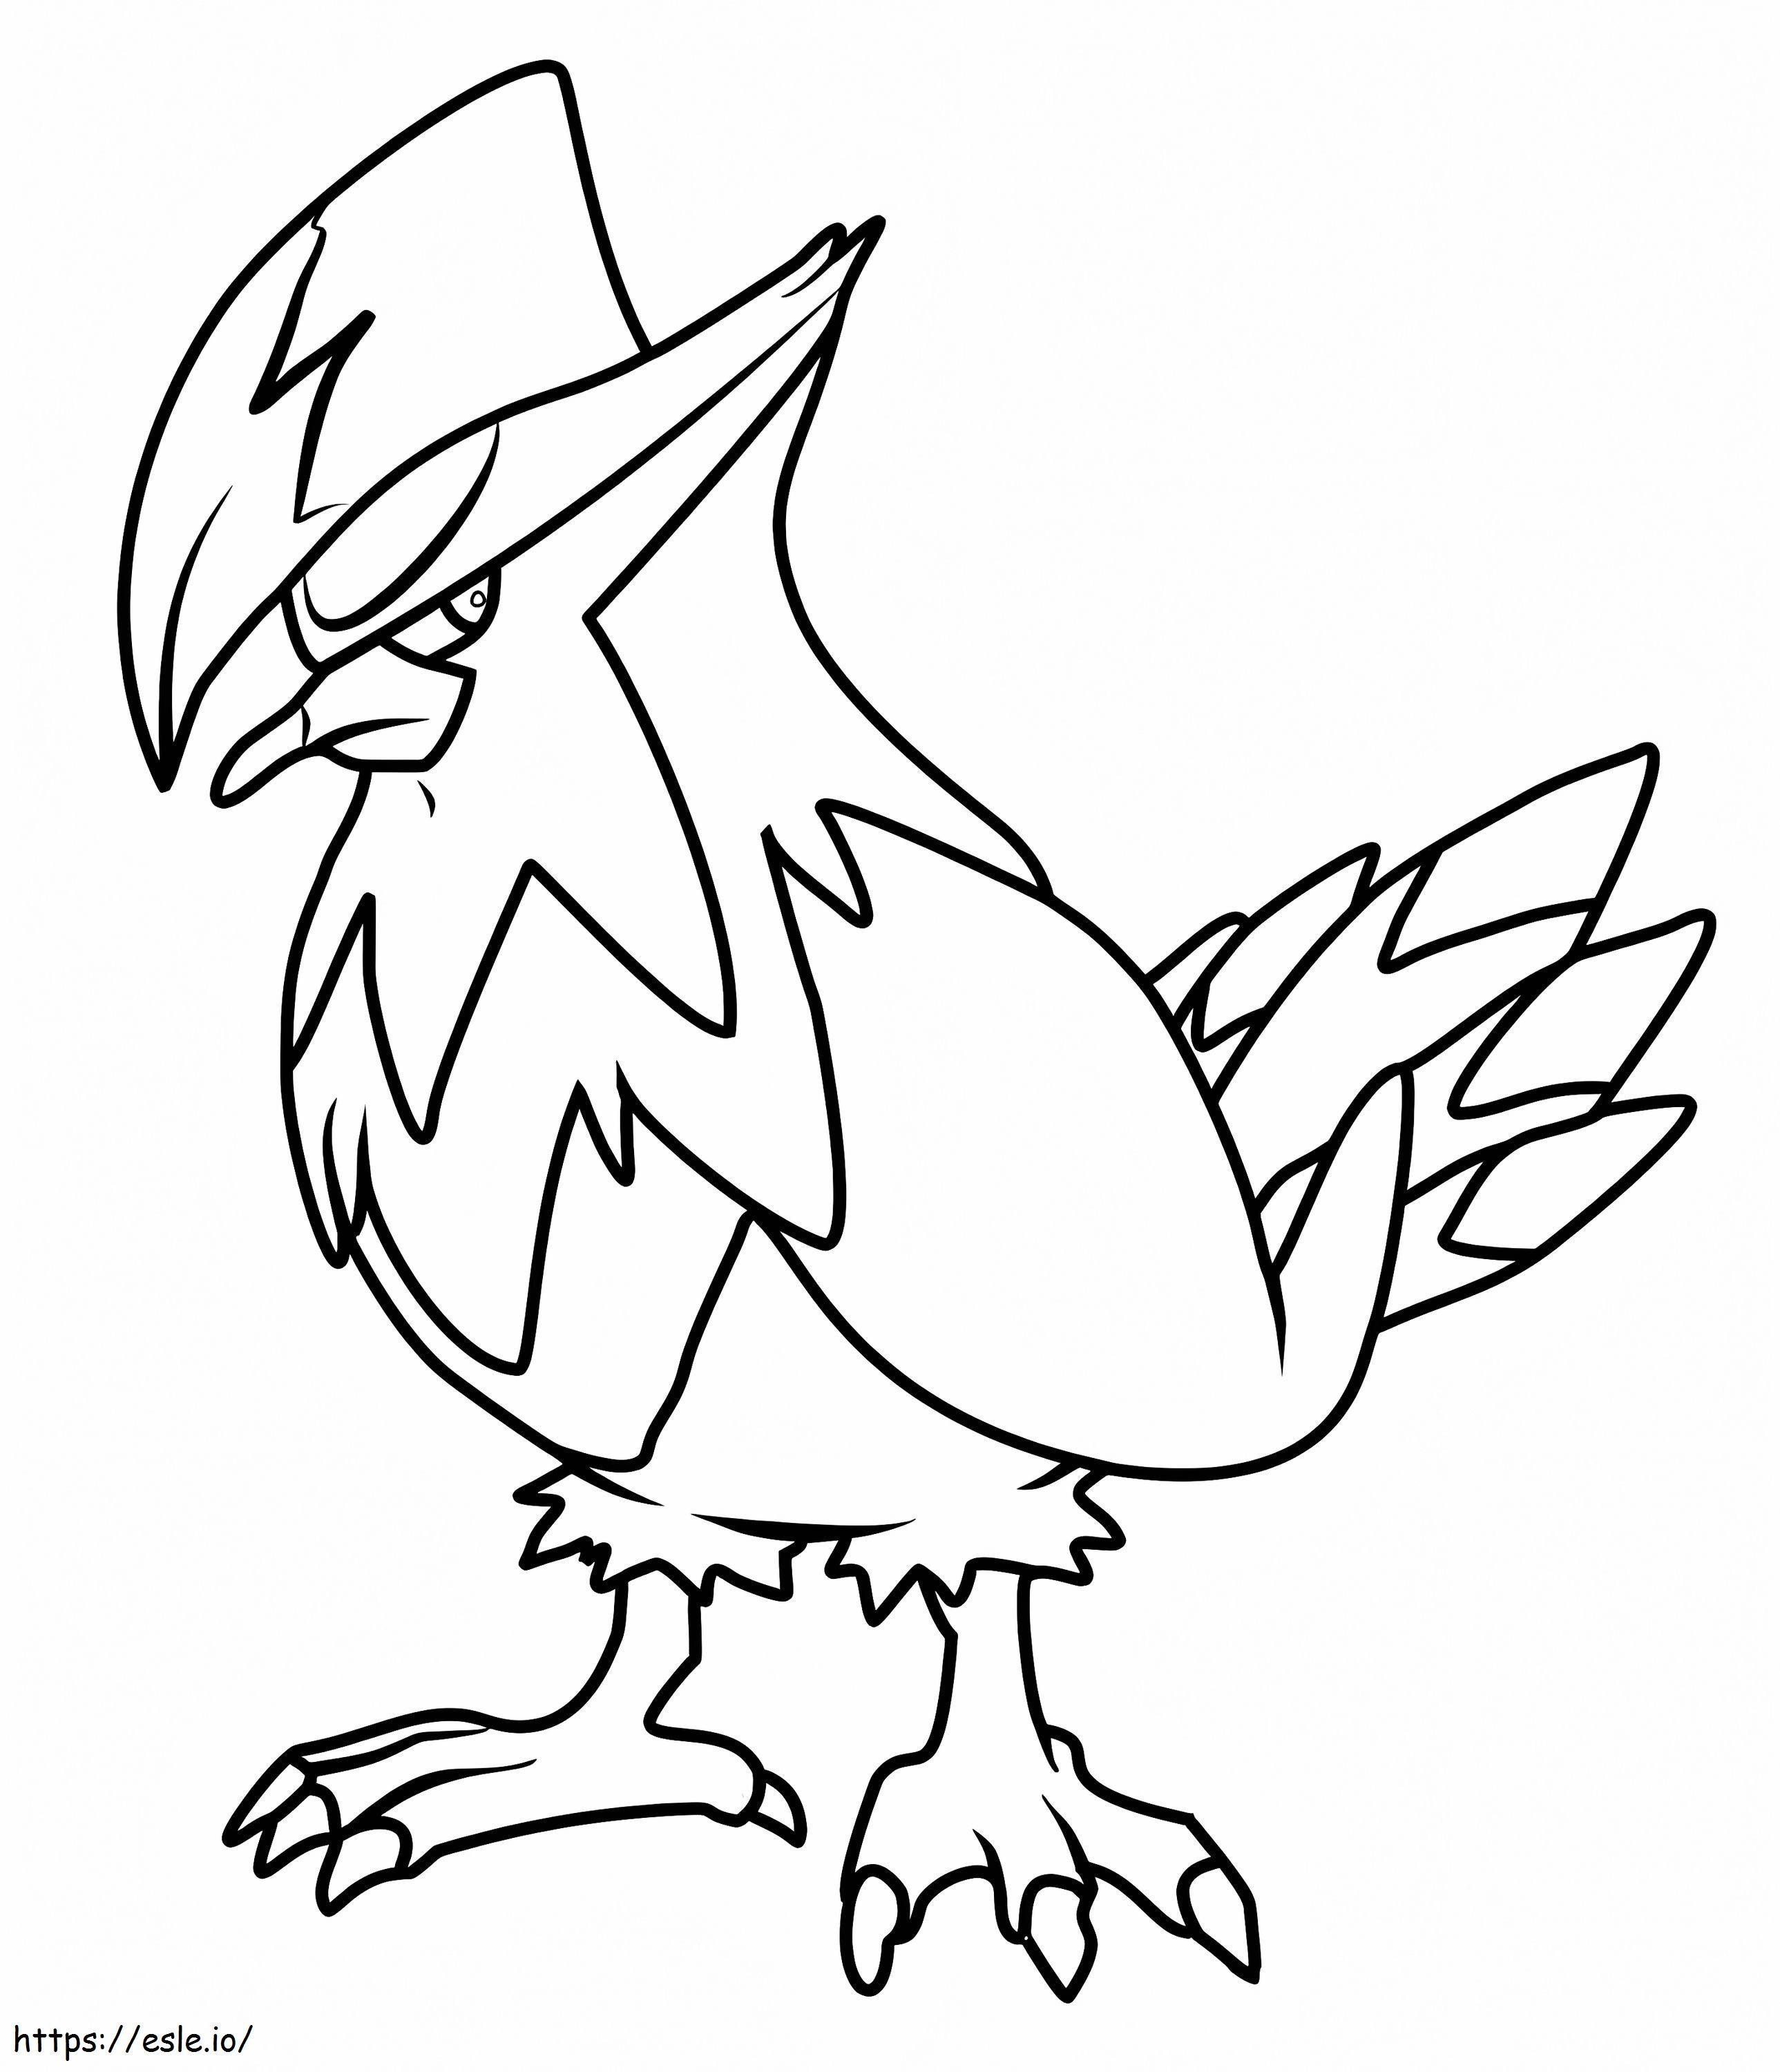 Coloriage Pokémon Staraptor à imprimer dessin